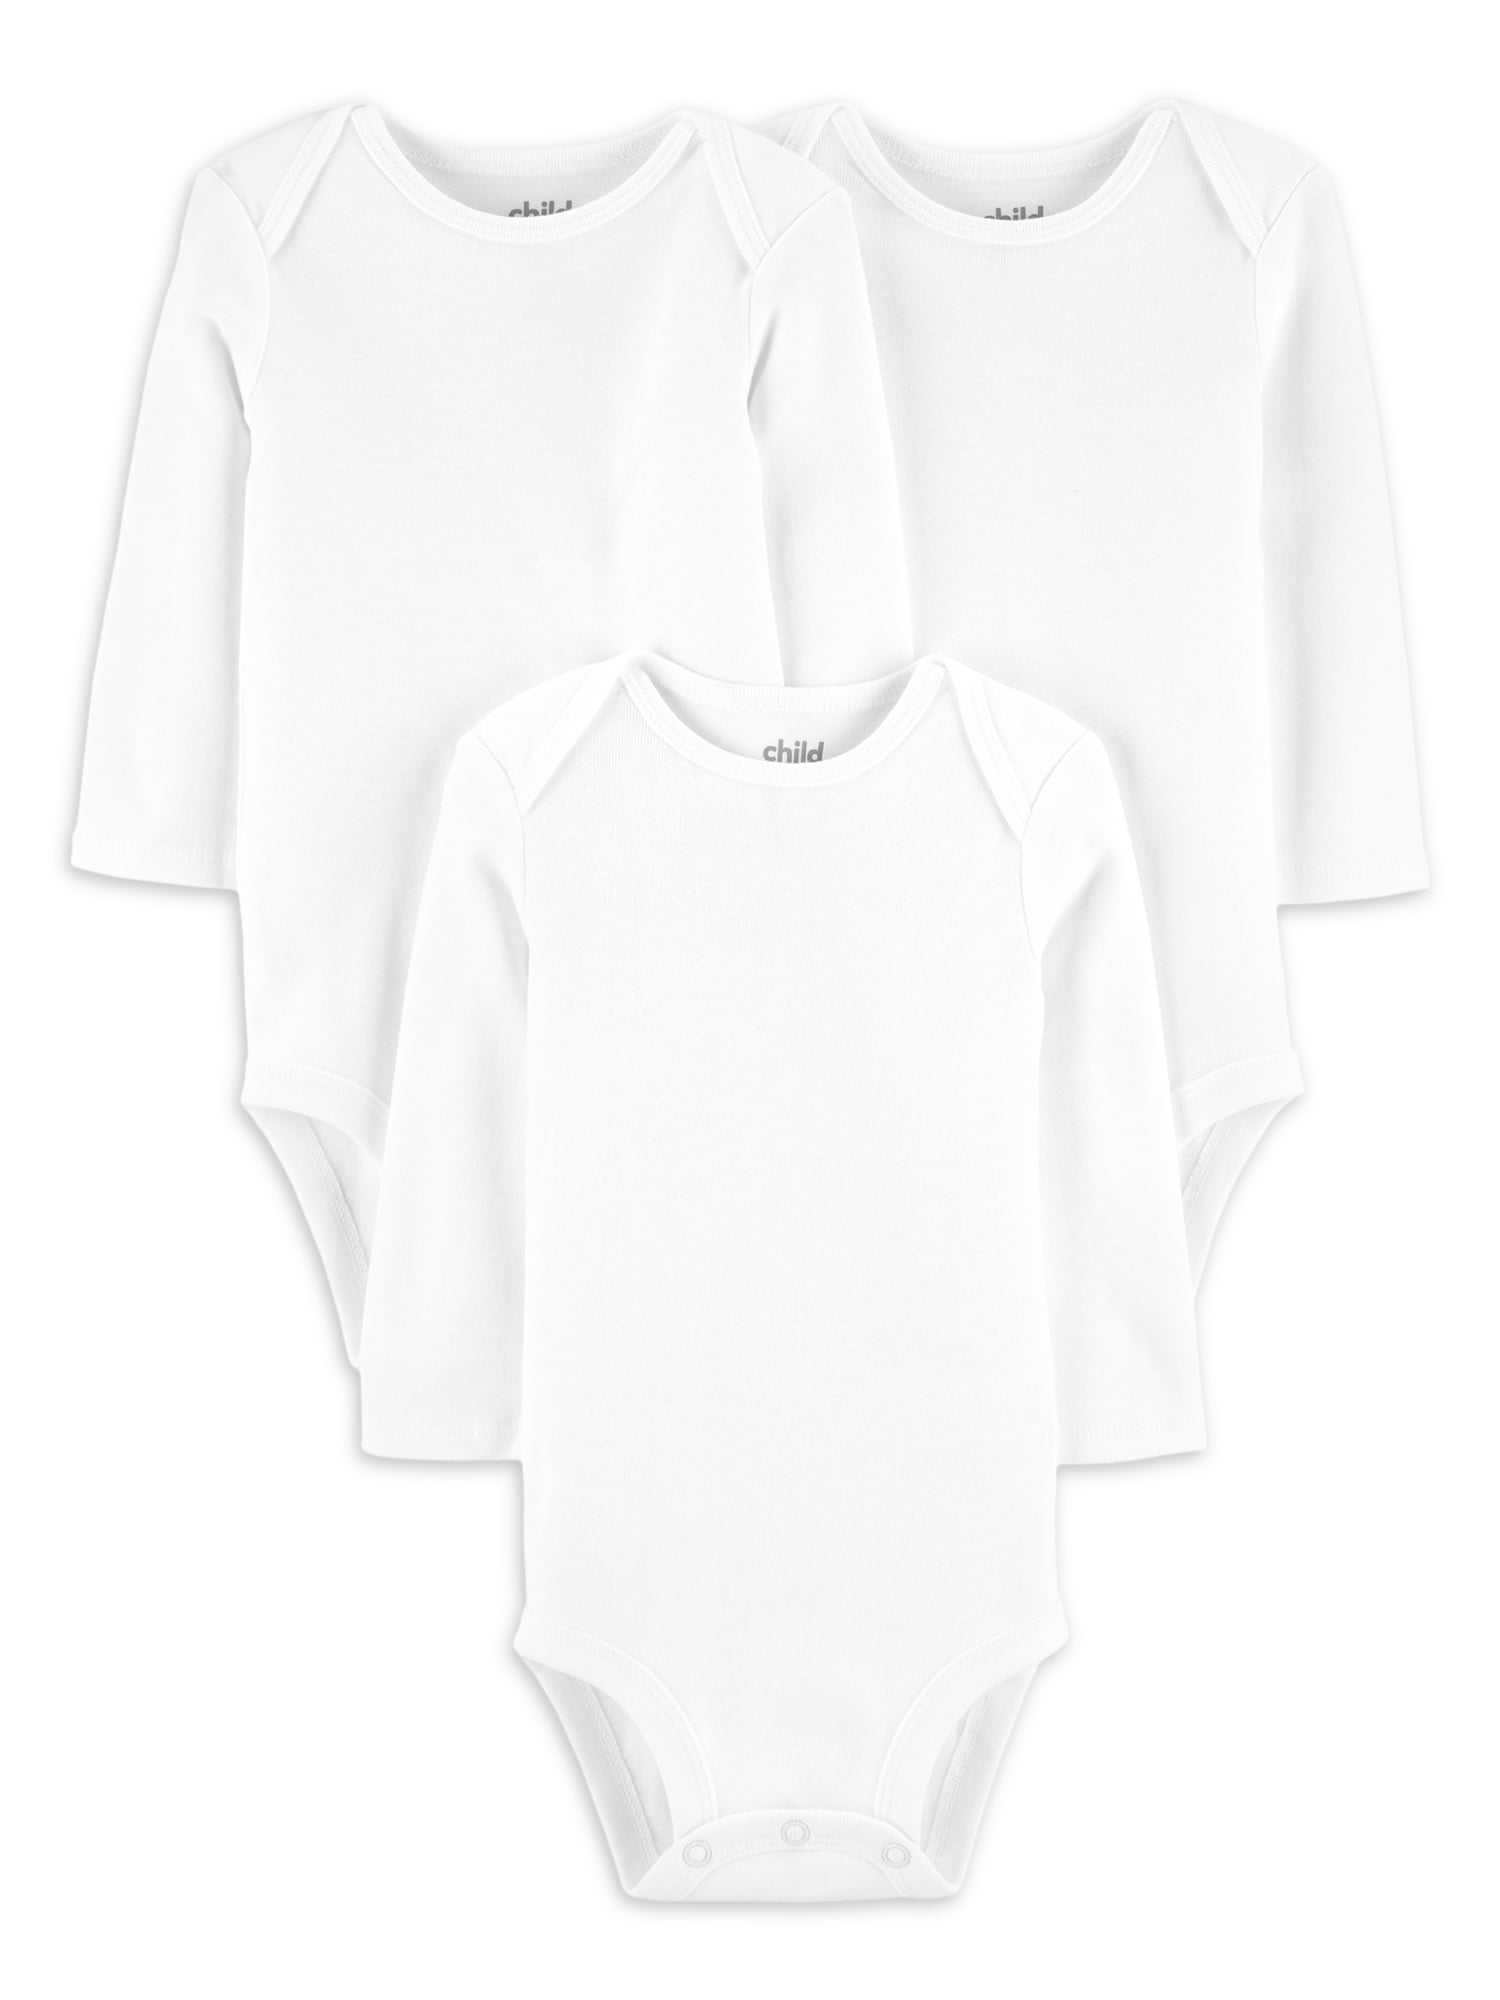 Carter's Child of Mine Baby Boys & Girls Long Sleeve Bodysuits, 3 Pack (Newborn-18M)